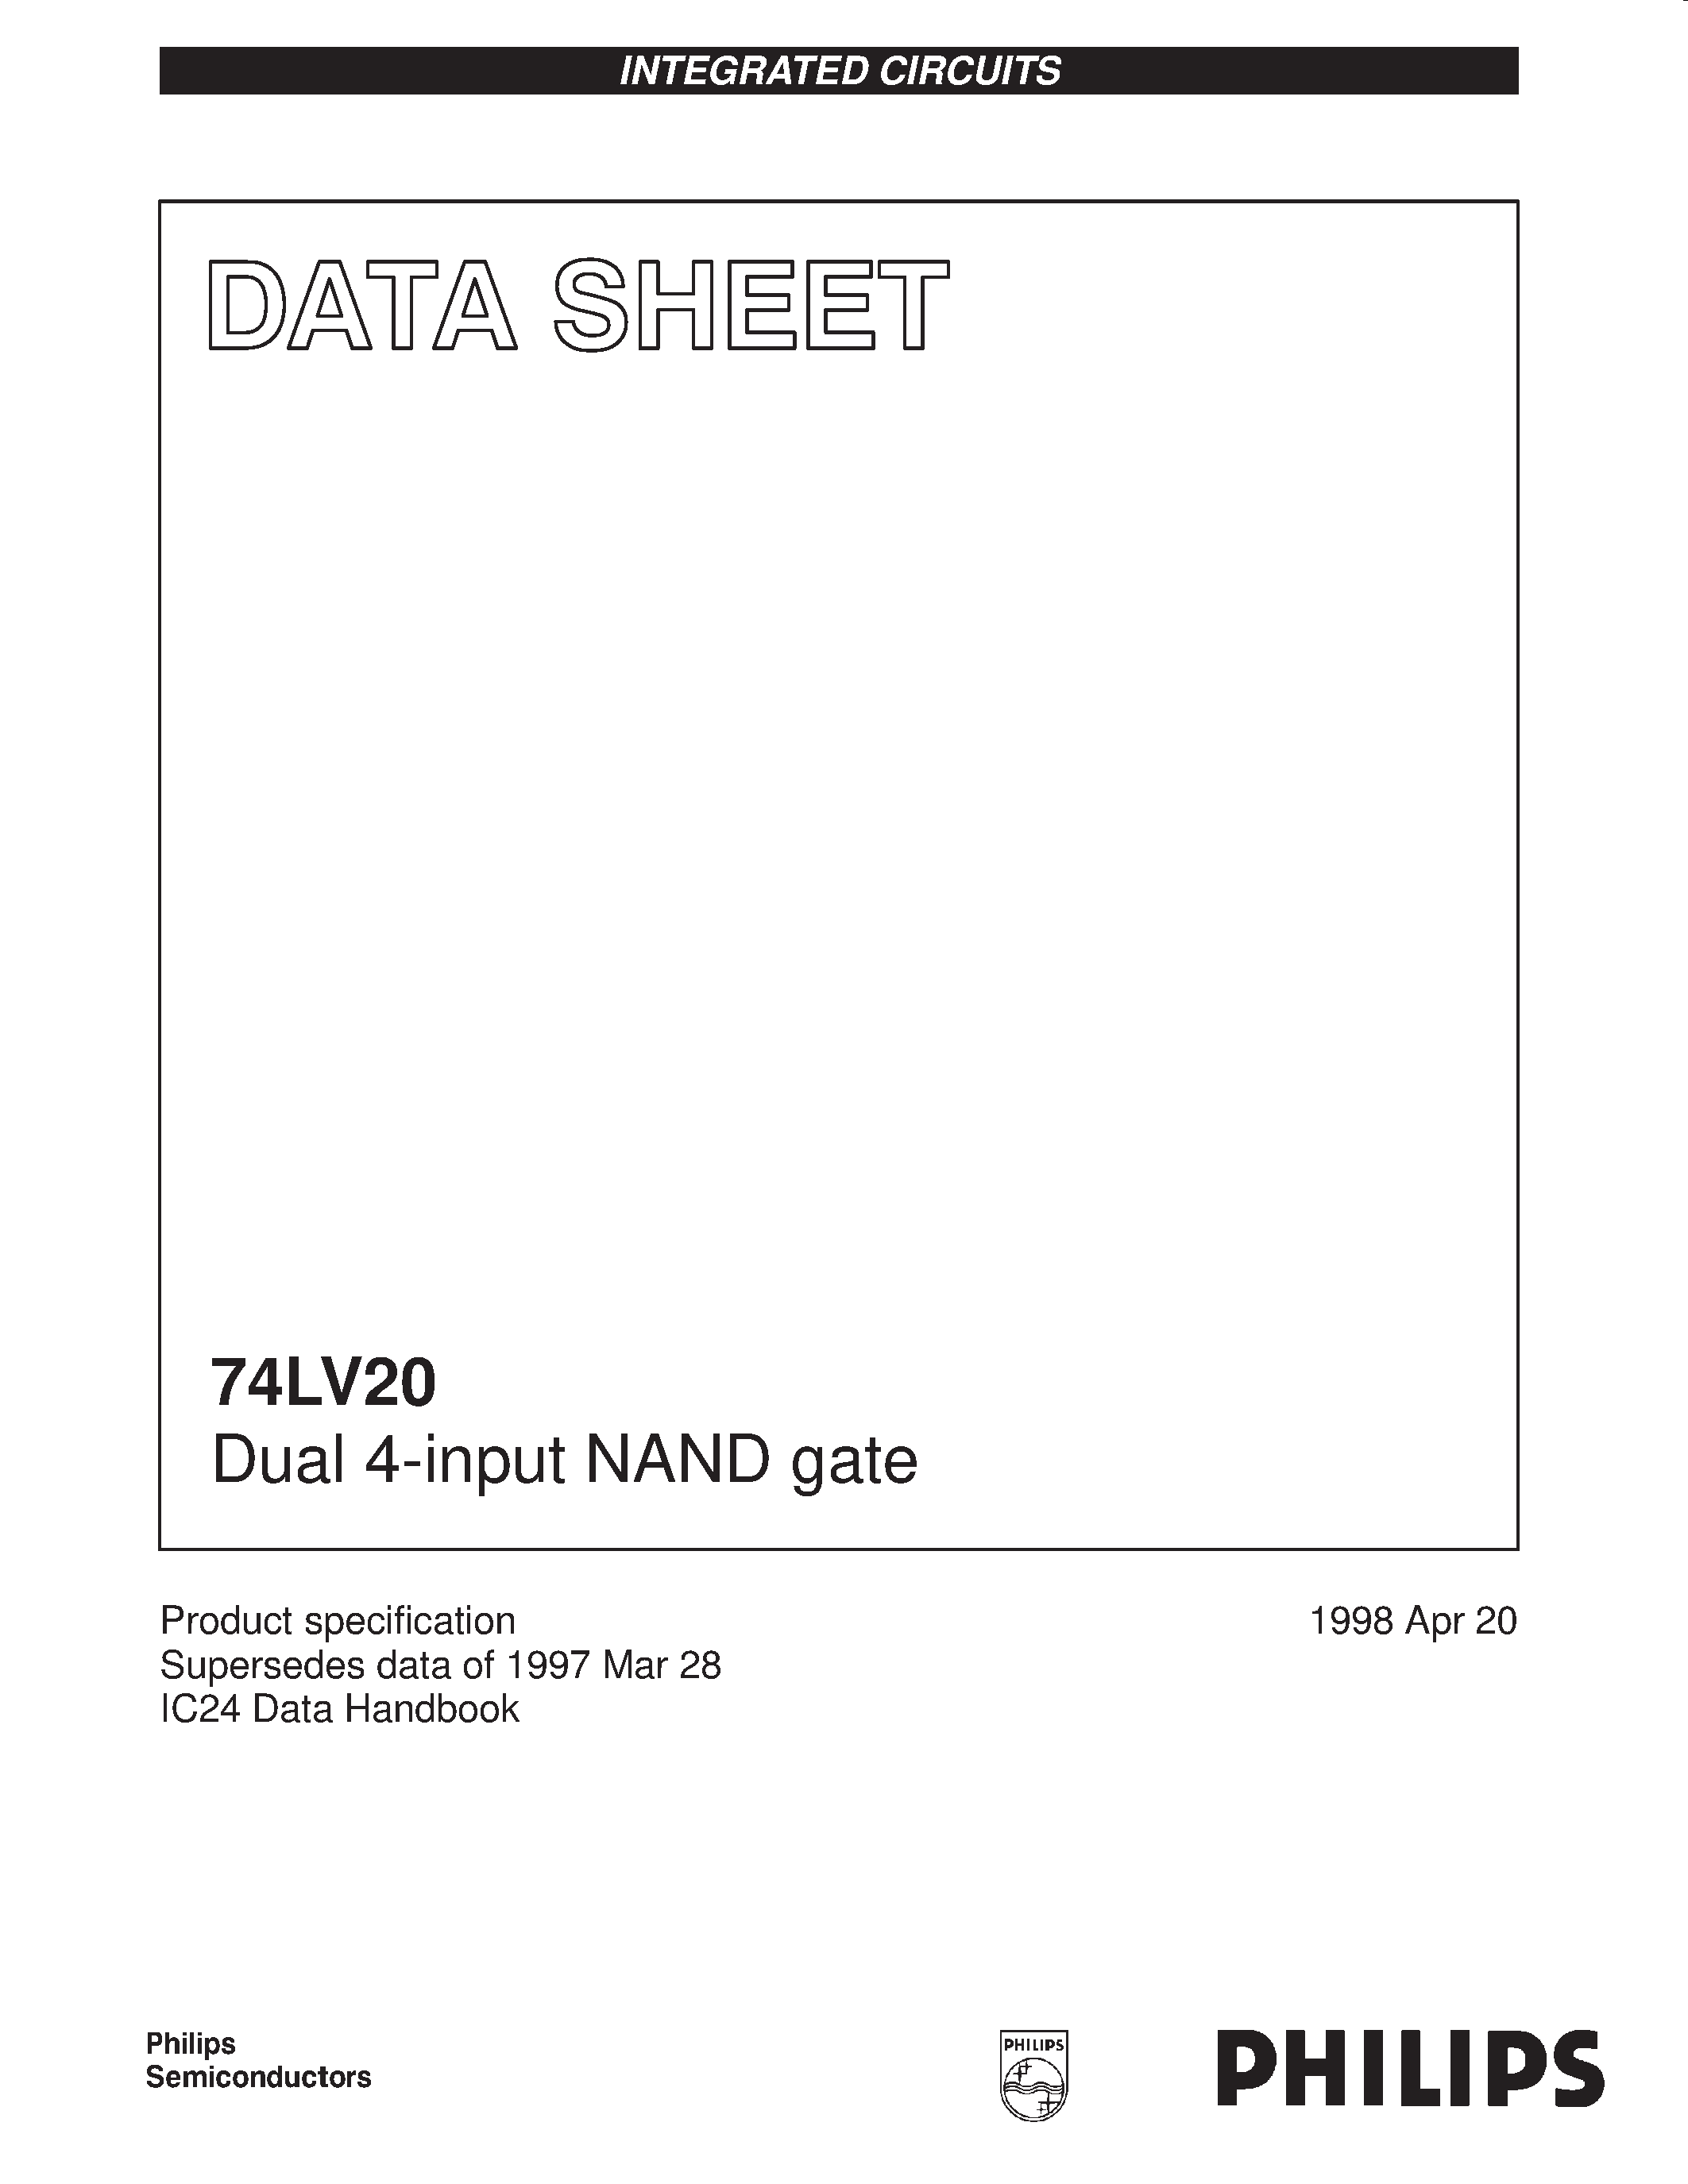 Даташит 74LV20 - Dual 4-input NAND gate страница 1